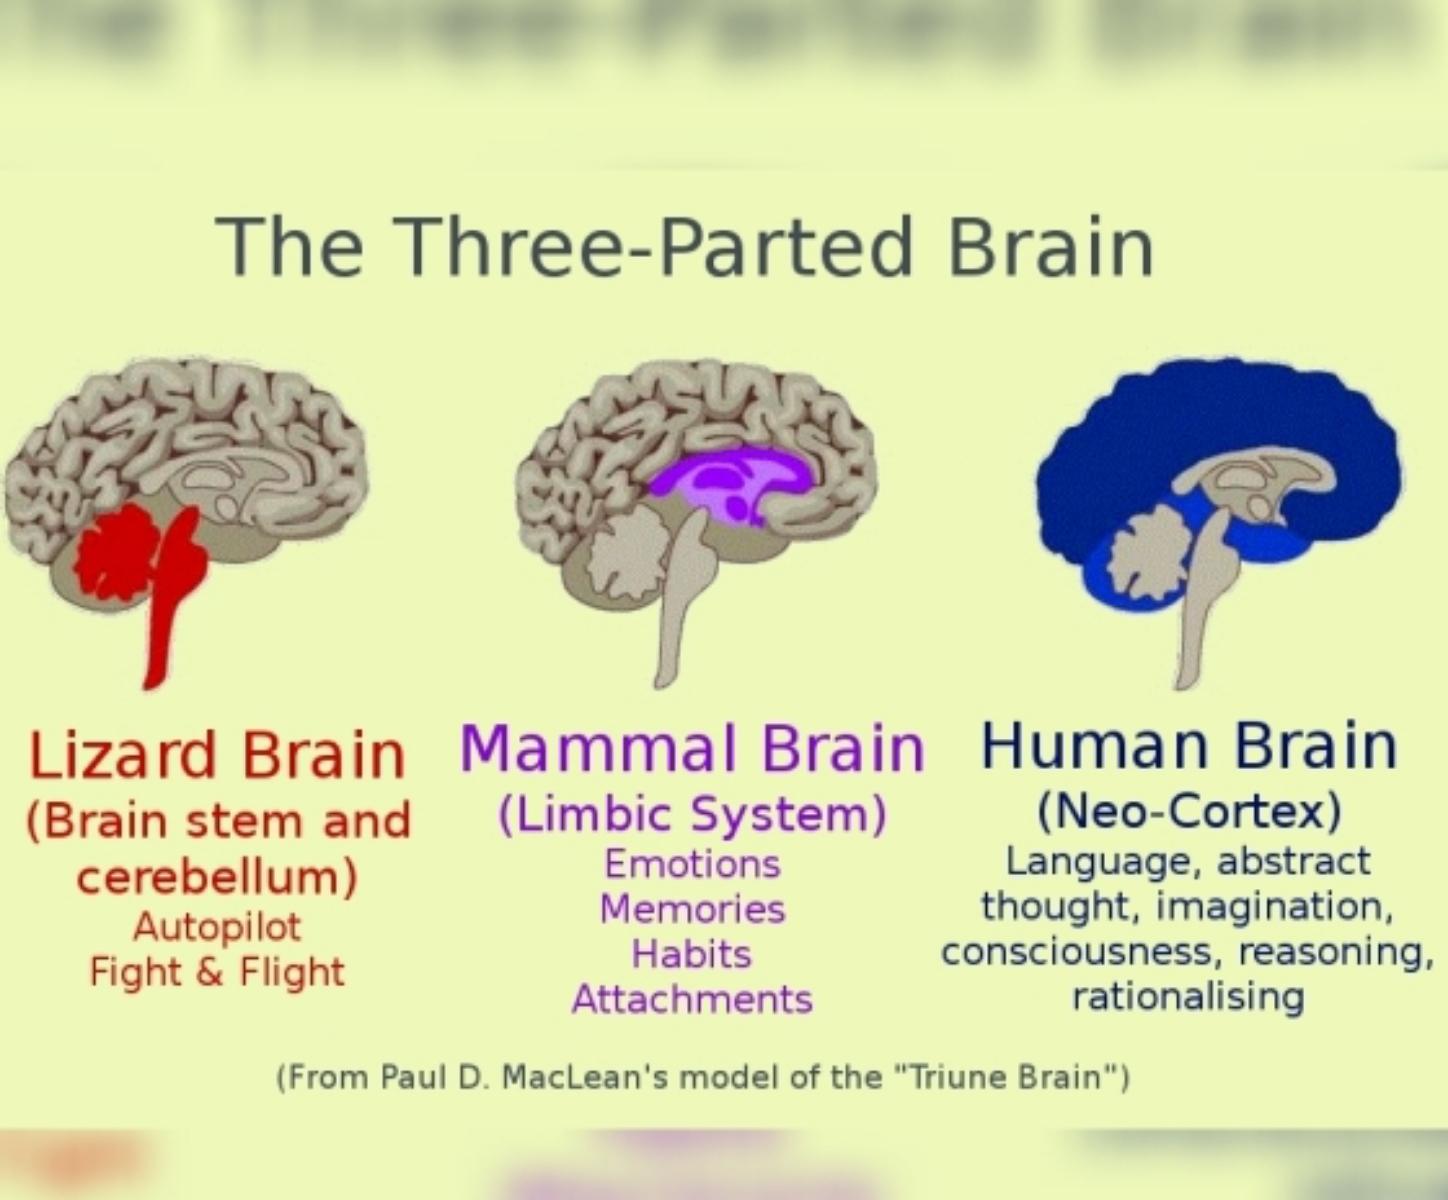 The human brain evolved ,too .